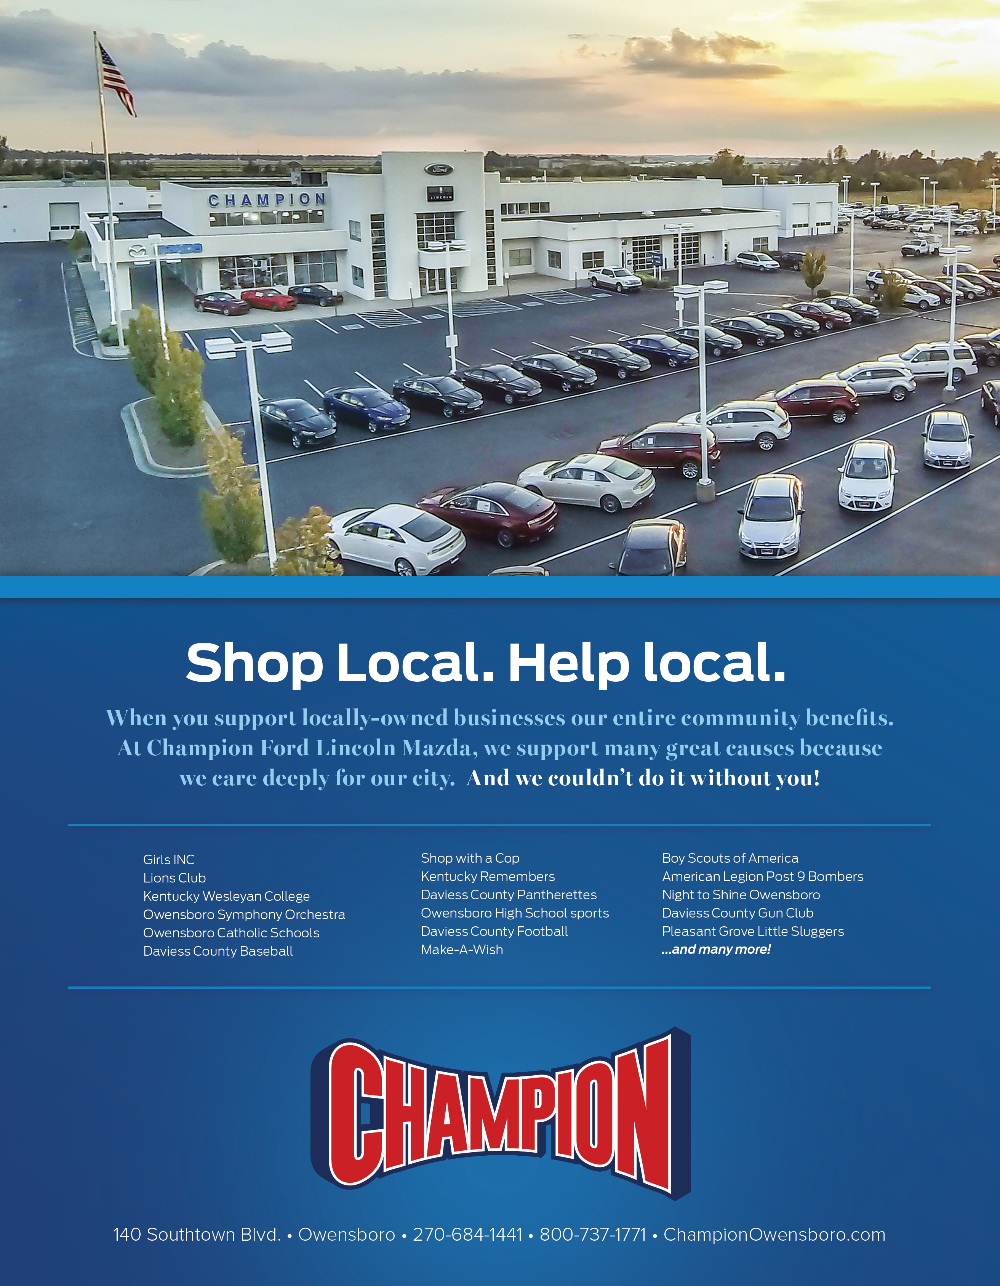 Champion Shop Local Image of Dealership